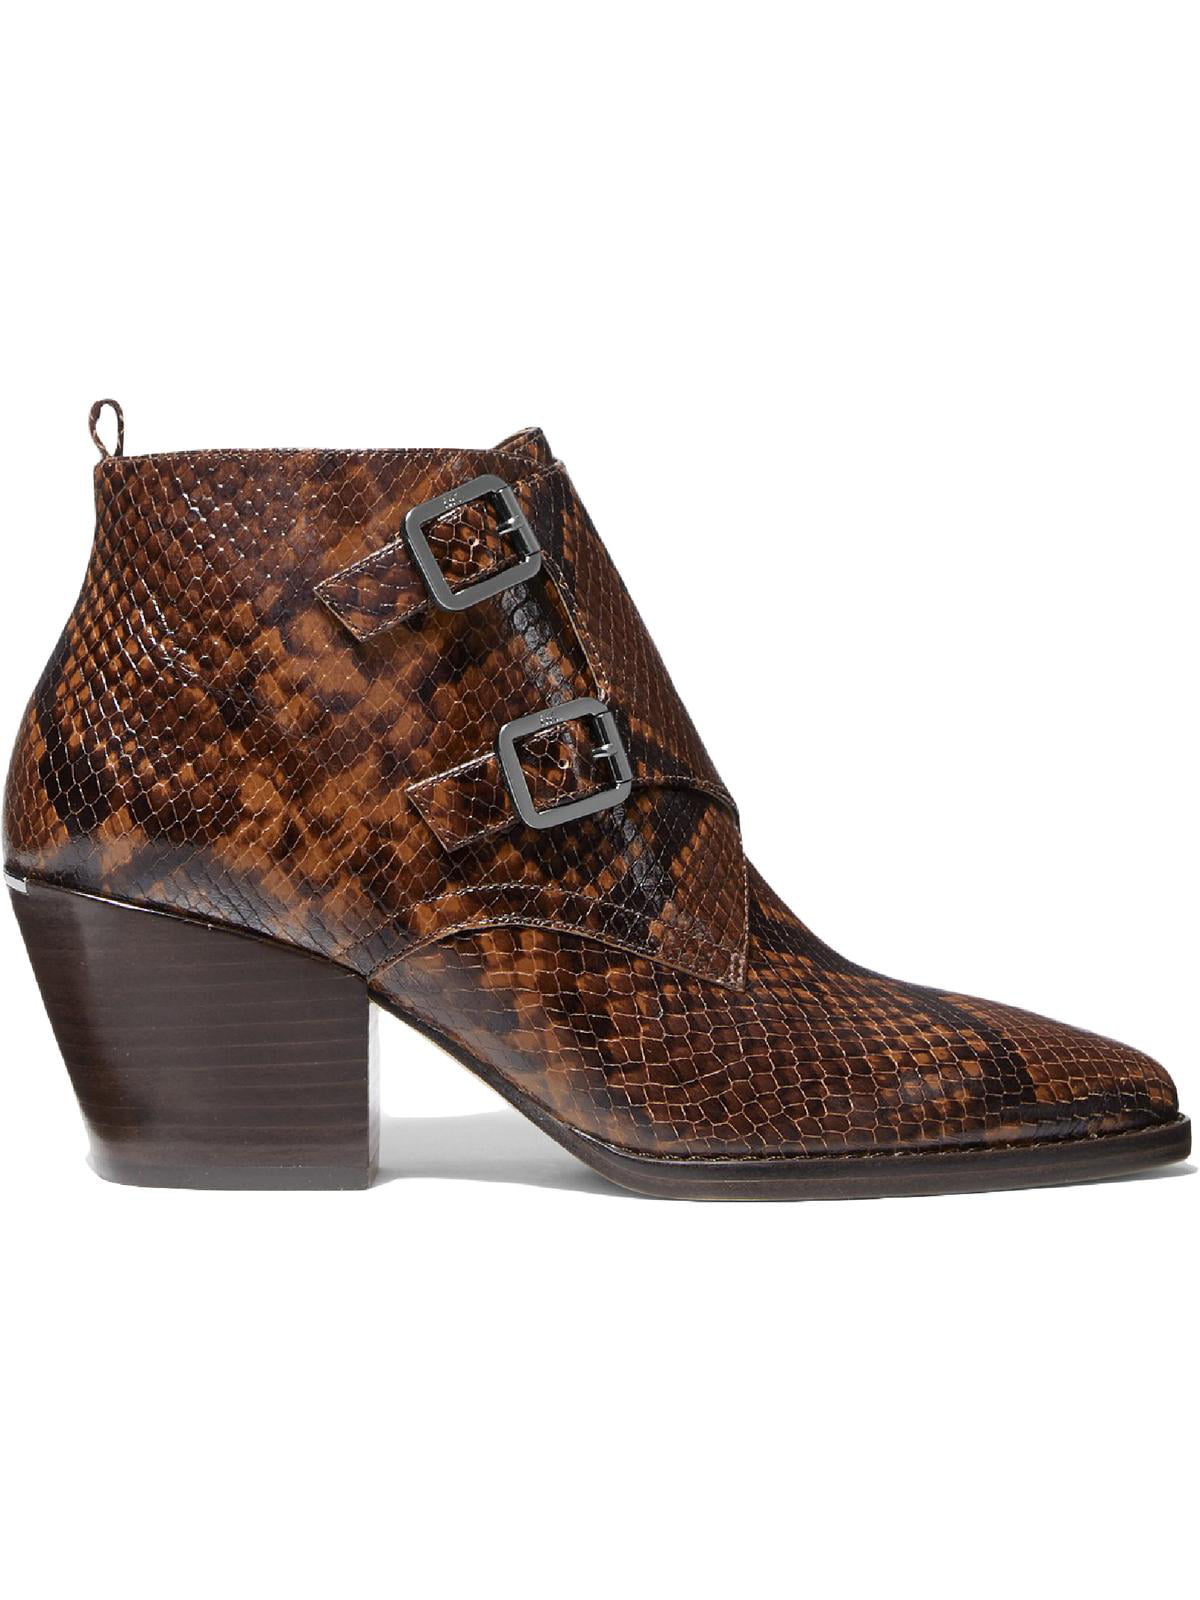 MICHAEL Michael Kors Womens Loni Leather Ankle Boots Brown  Medium (B,M)  